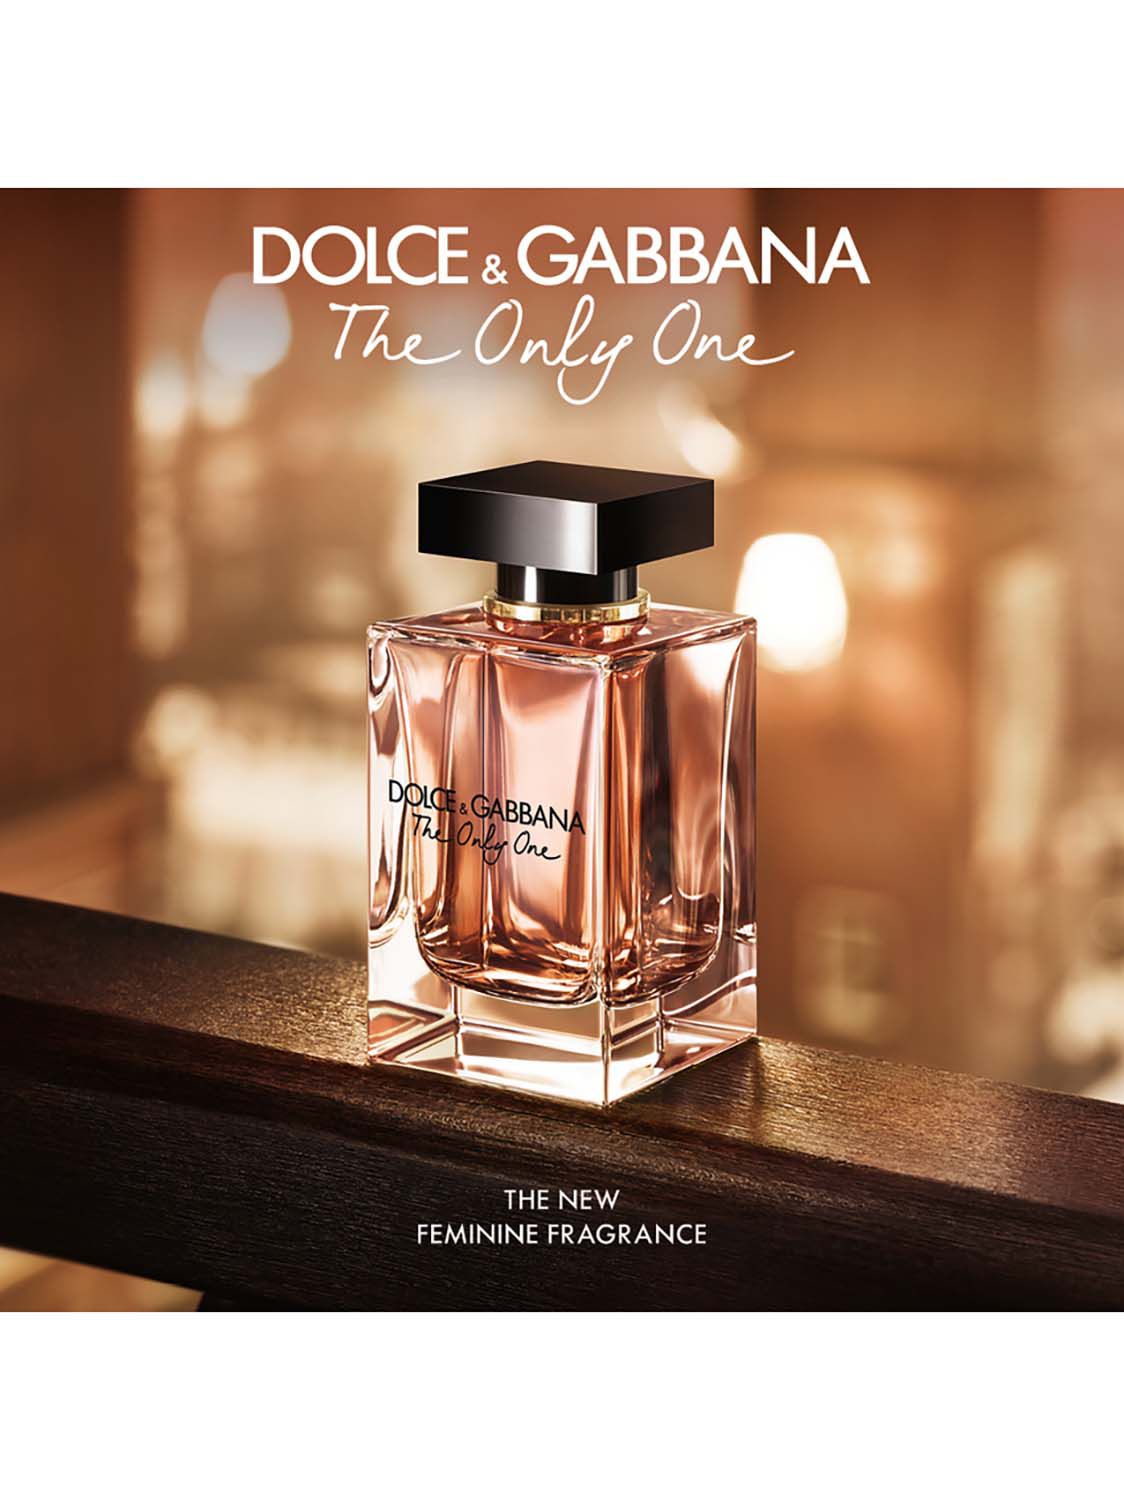 Dolce & Gabbana The Only One Eau de Parfum, 30ml at John Lewis & Partners